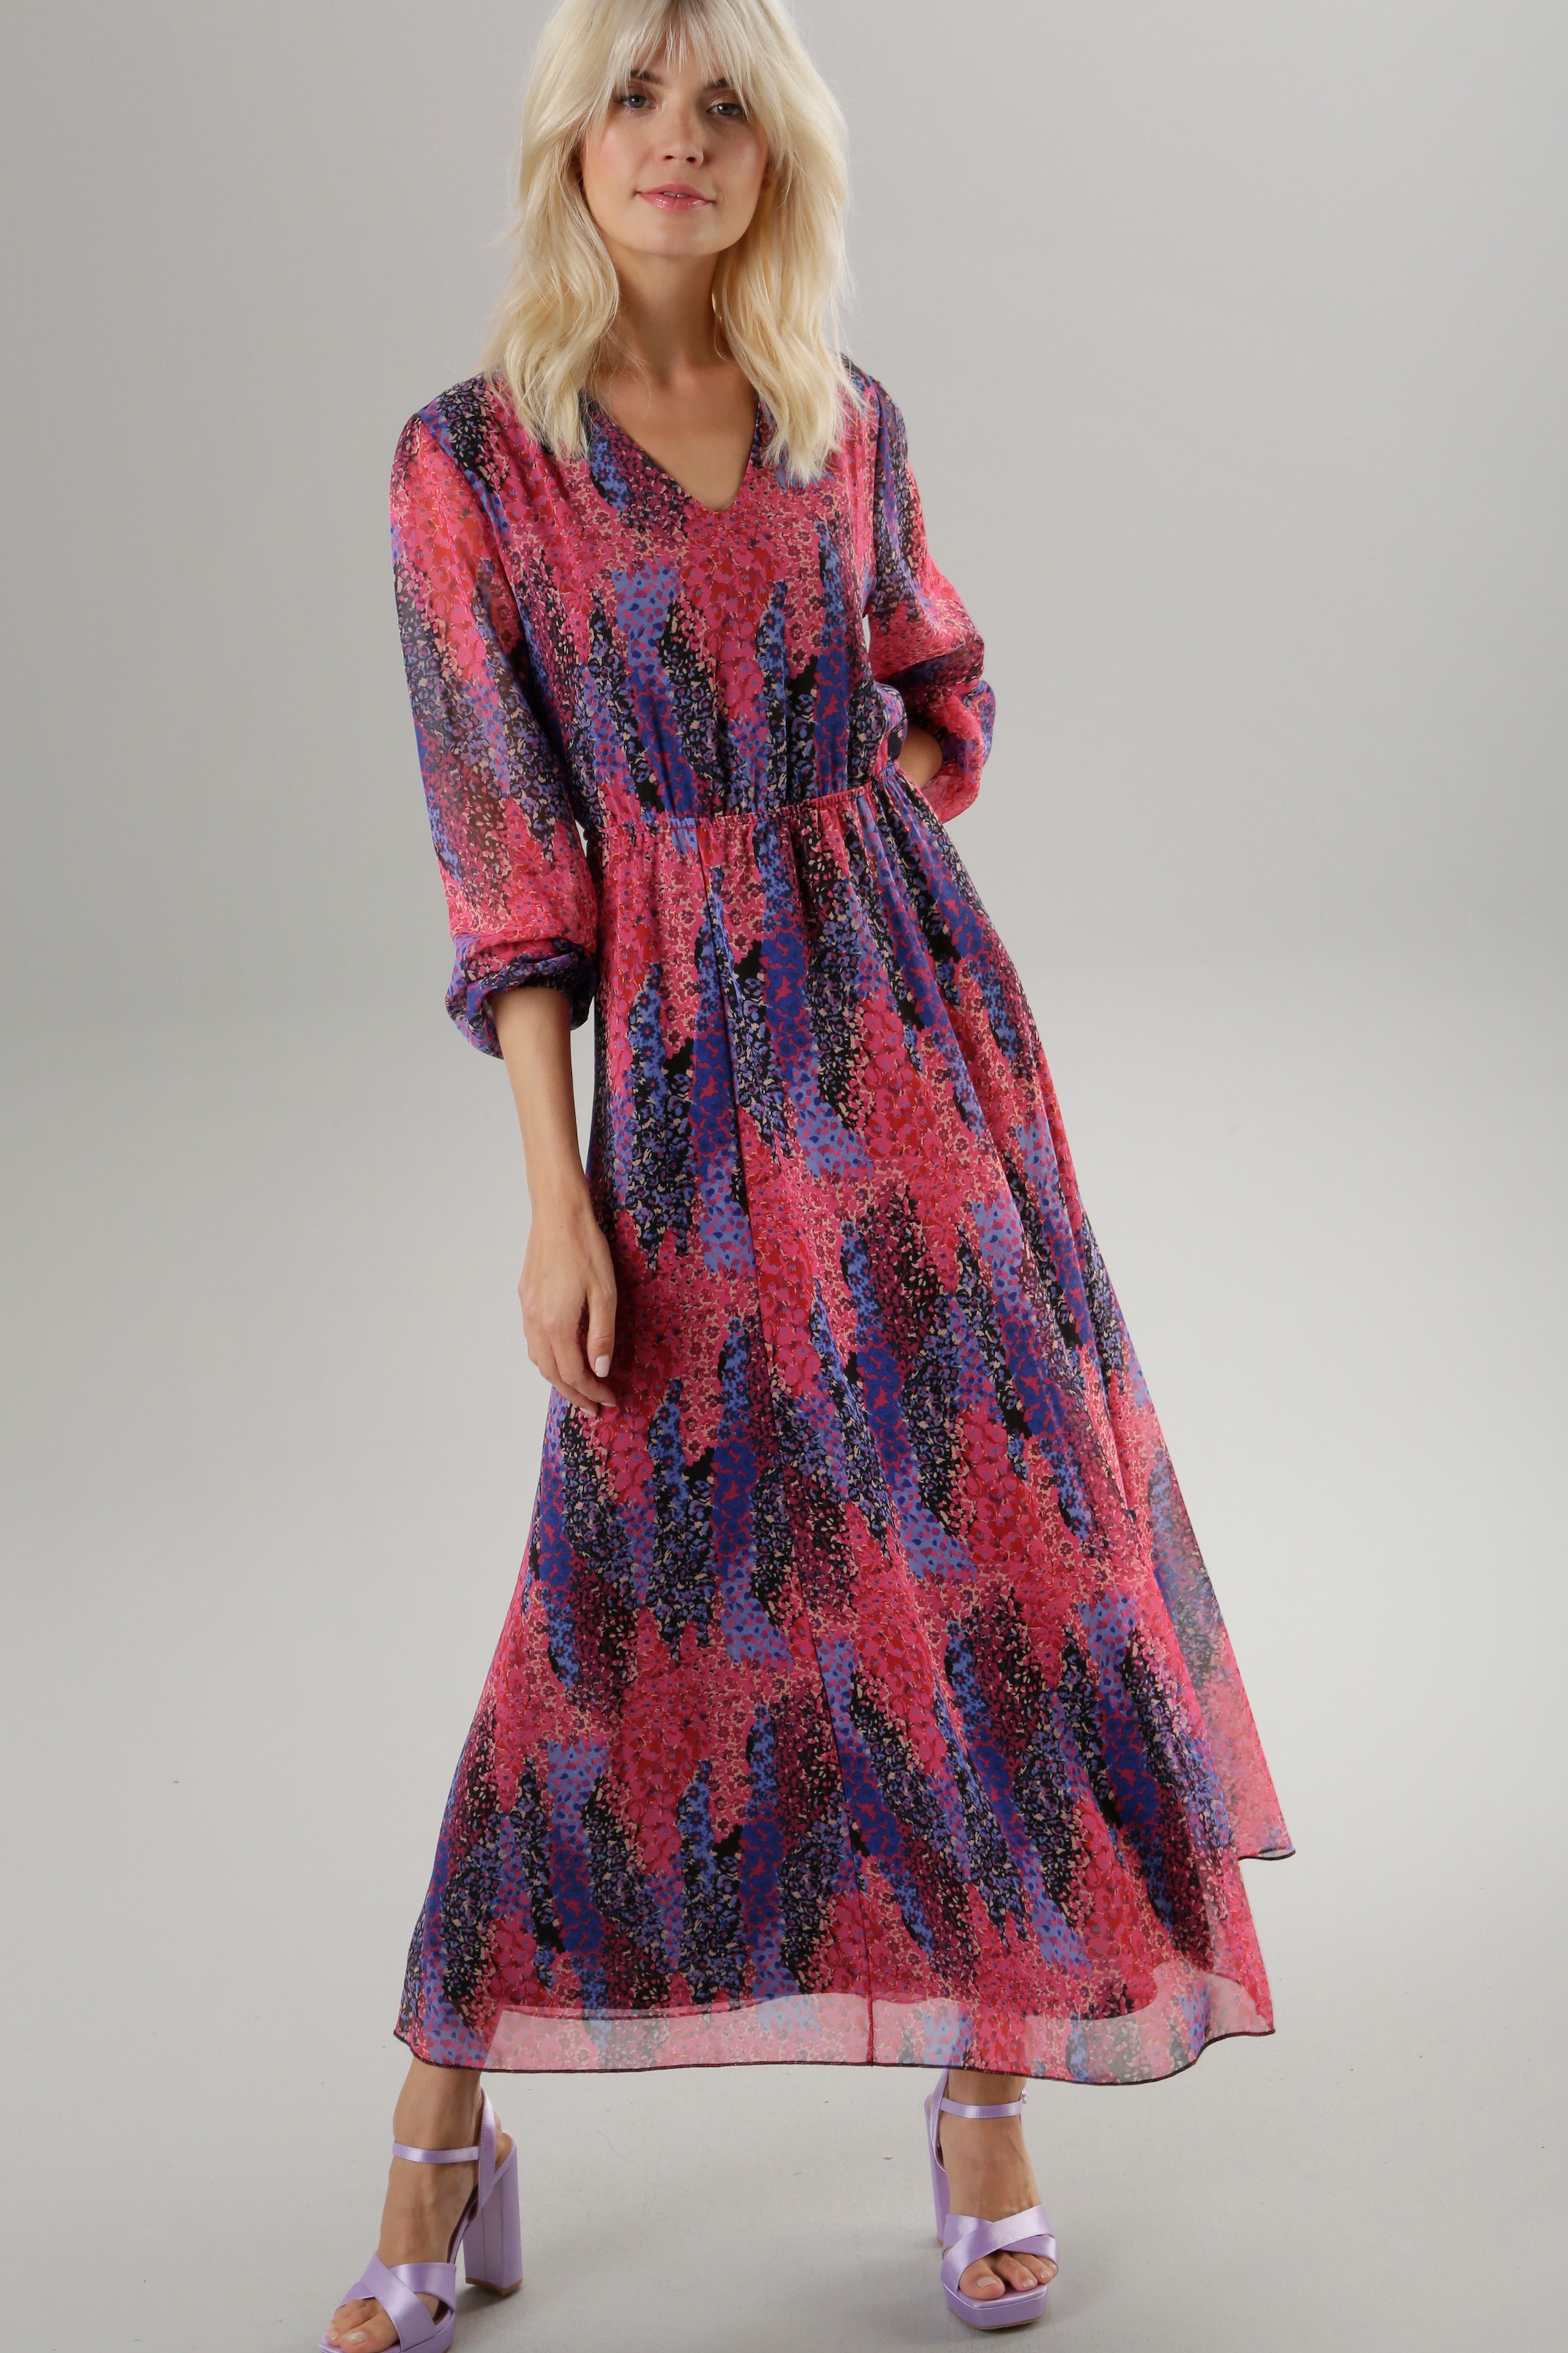 Aniston SELECTED Sommerkleid mit farbenfrohem Blumendruck | Sommerkleider